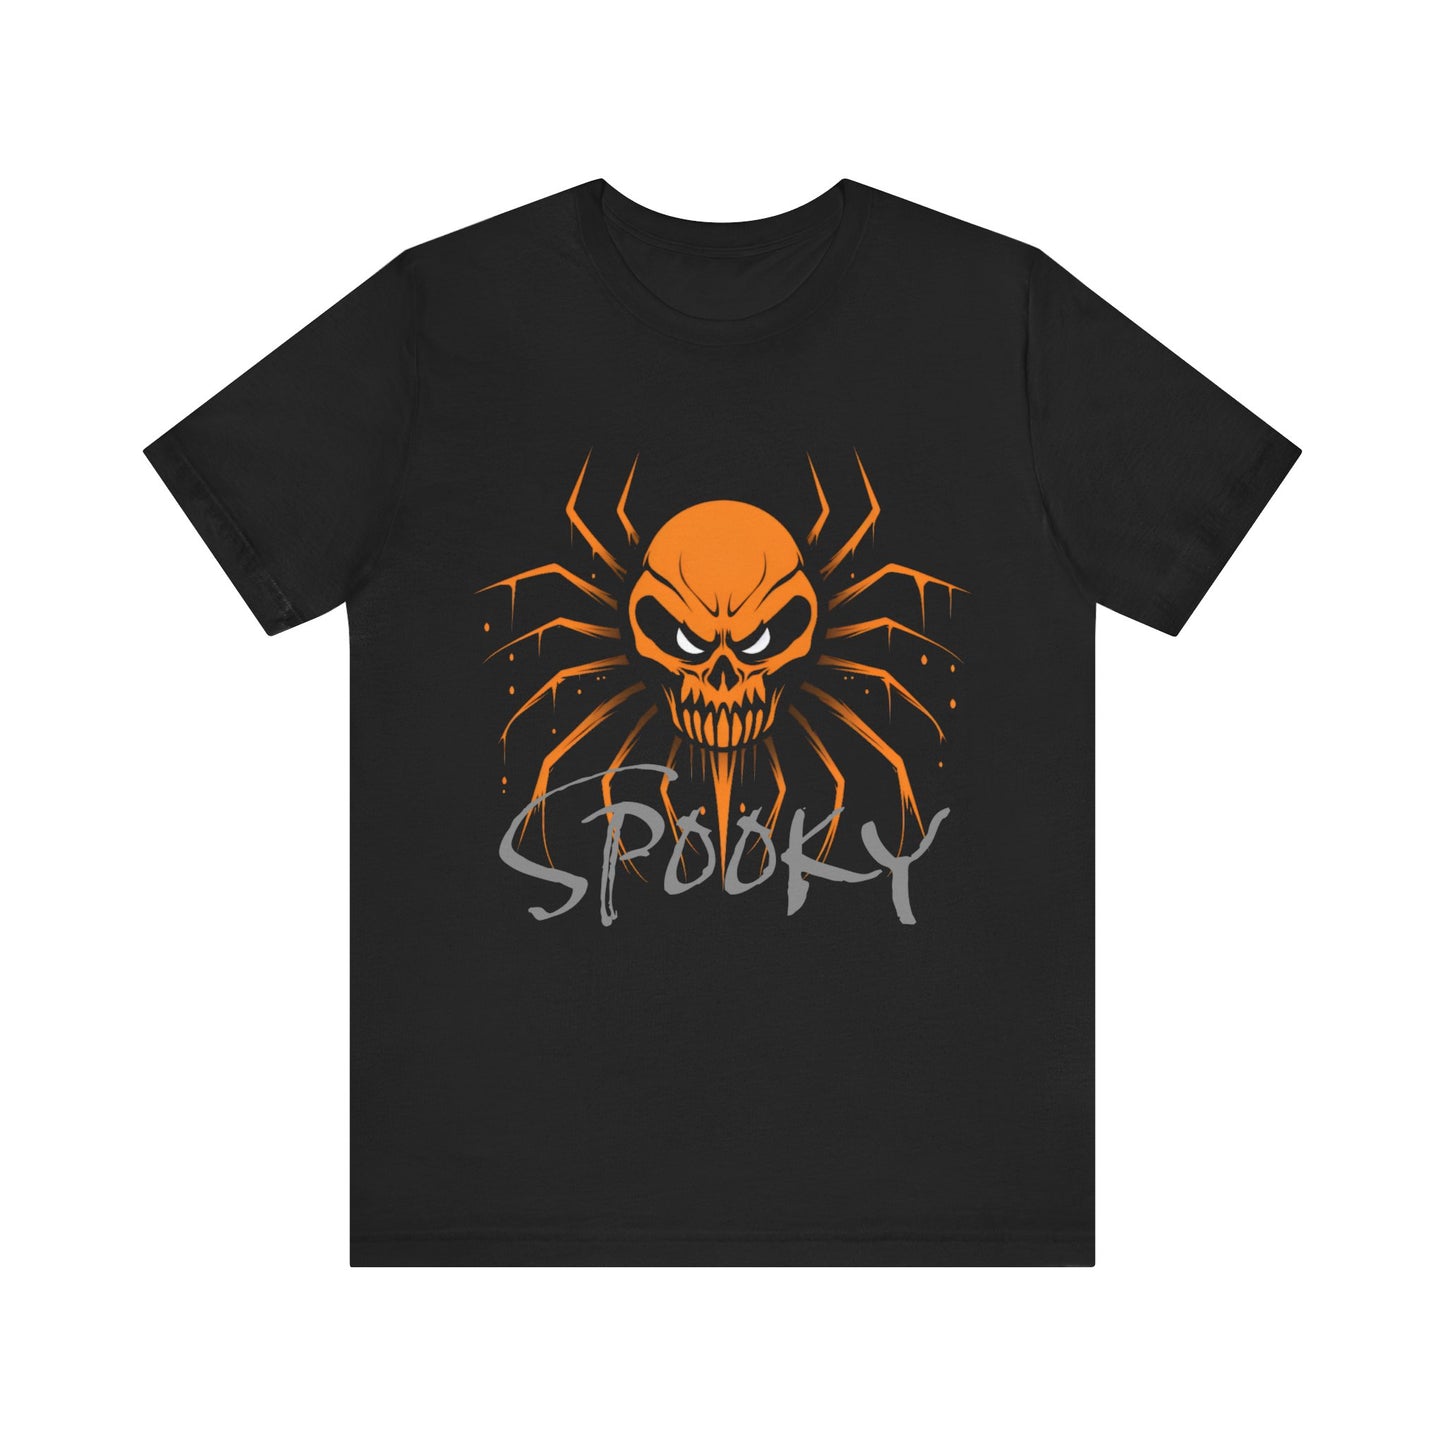 Halloween Shirt, Spooky Shirt, Spooky TShirt, Halloween Gift, Halloween Gift Idea, Scary Halloween Shirt, Skull Shirt, Spider Shirt